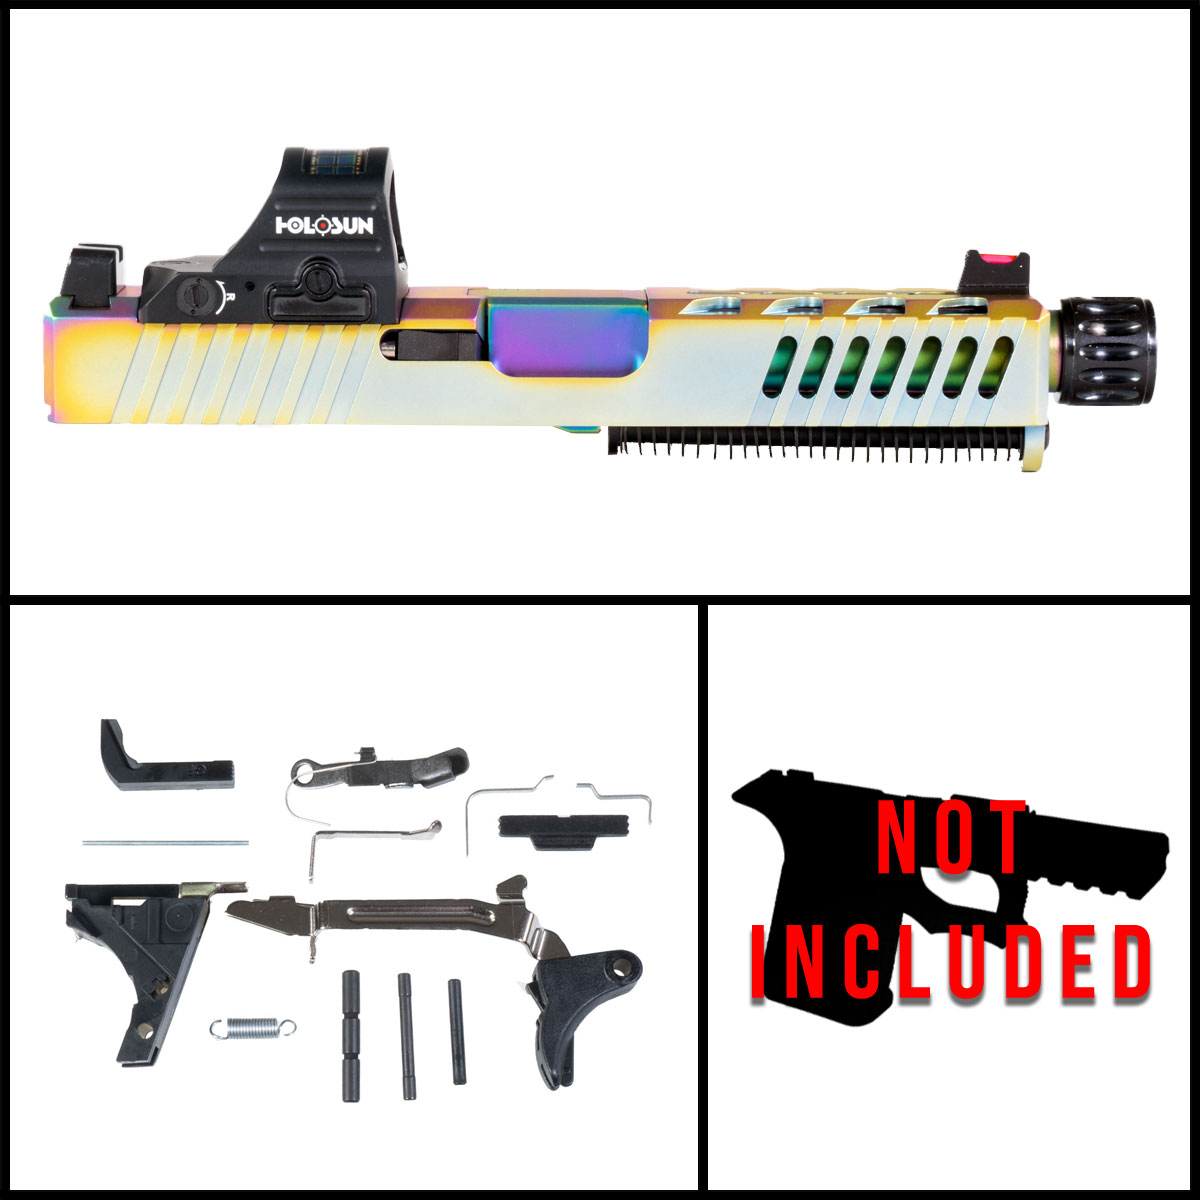 DDS 'Spectrum w/ HS507C-X2' 9mm Full Pistol Build Kits (Everything Minus Frame) - Glock 19 Gen 1-2 Compatible